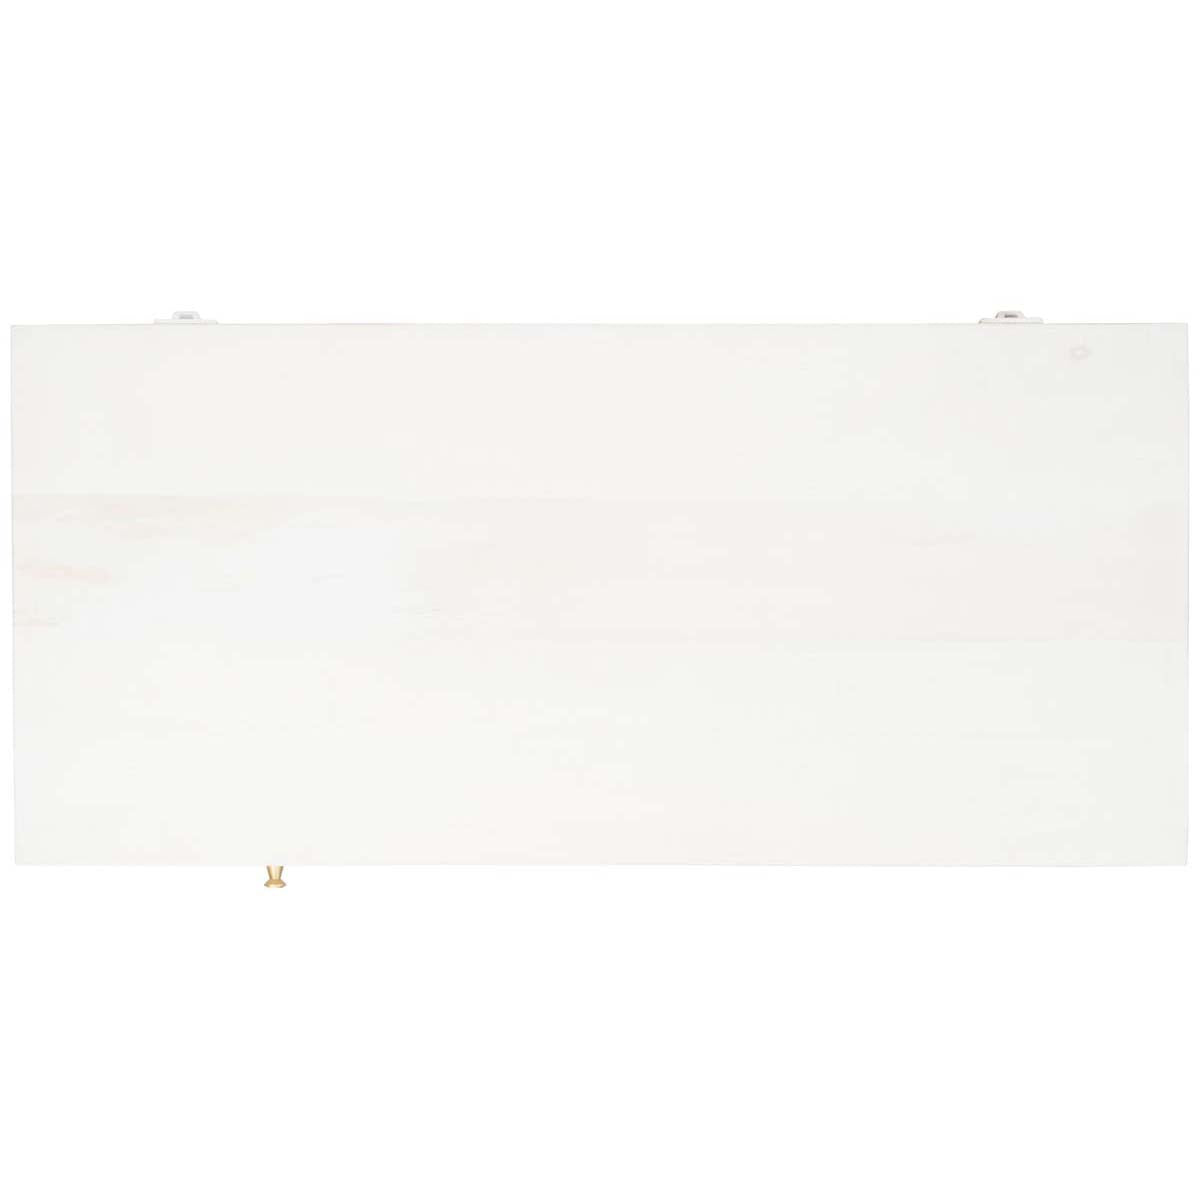 Safavieh Marigold Desk , DSK9001 - White Washed / Brass